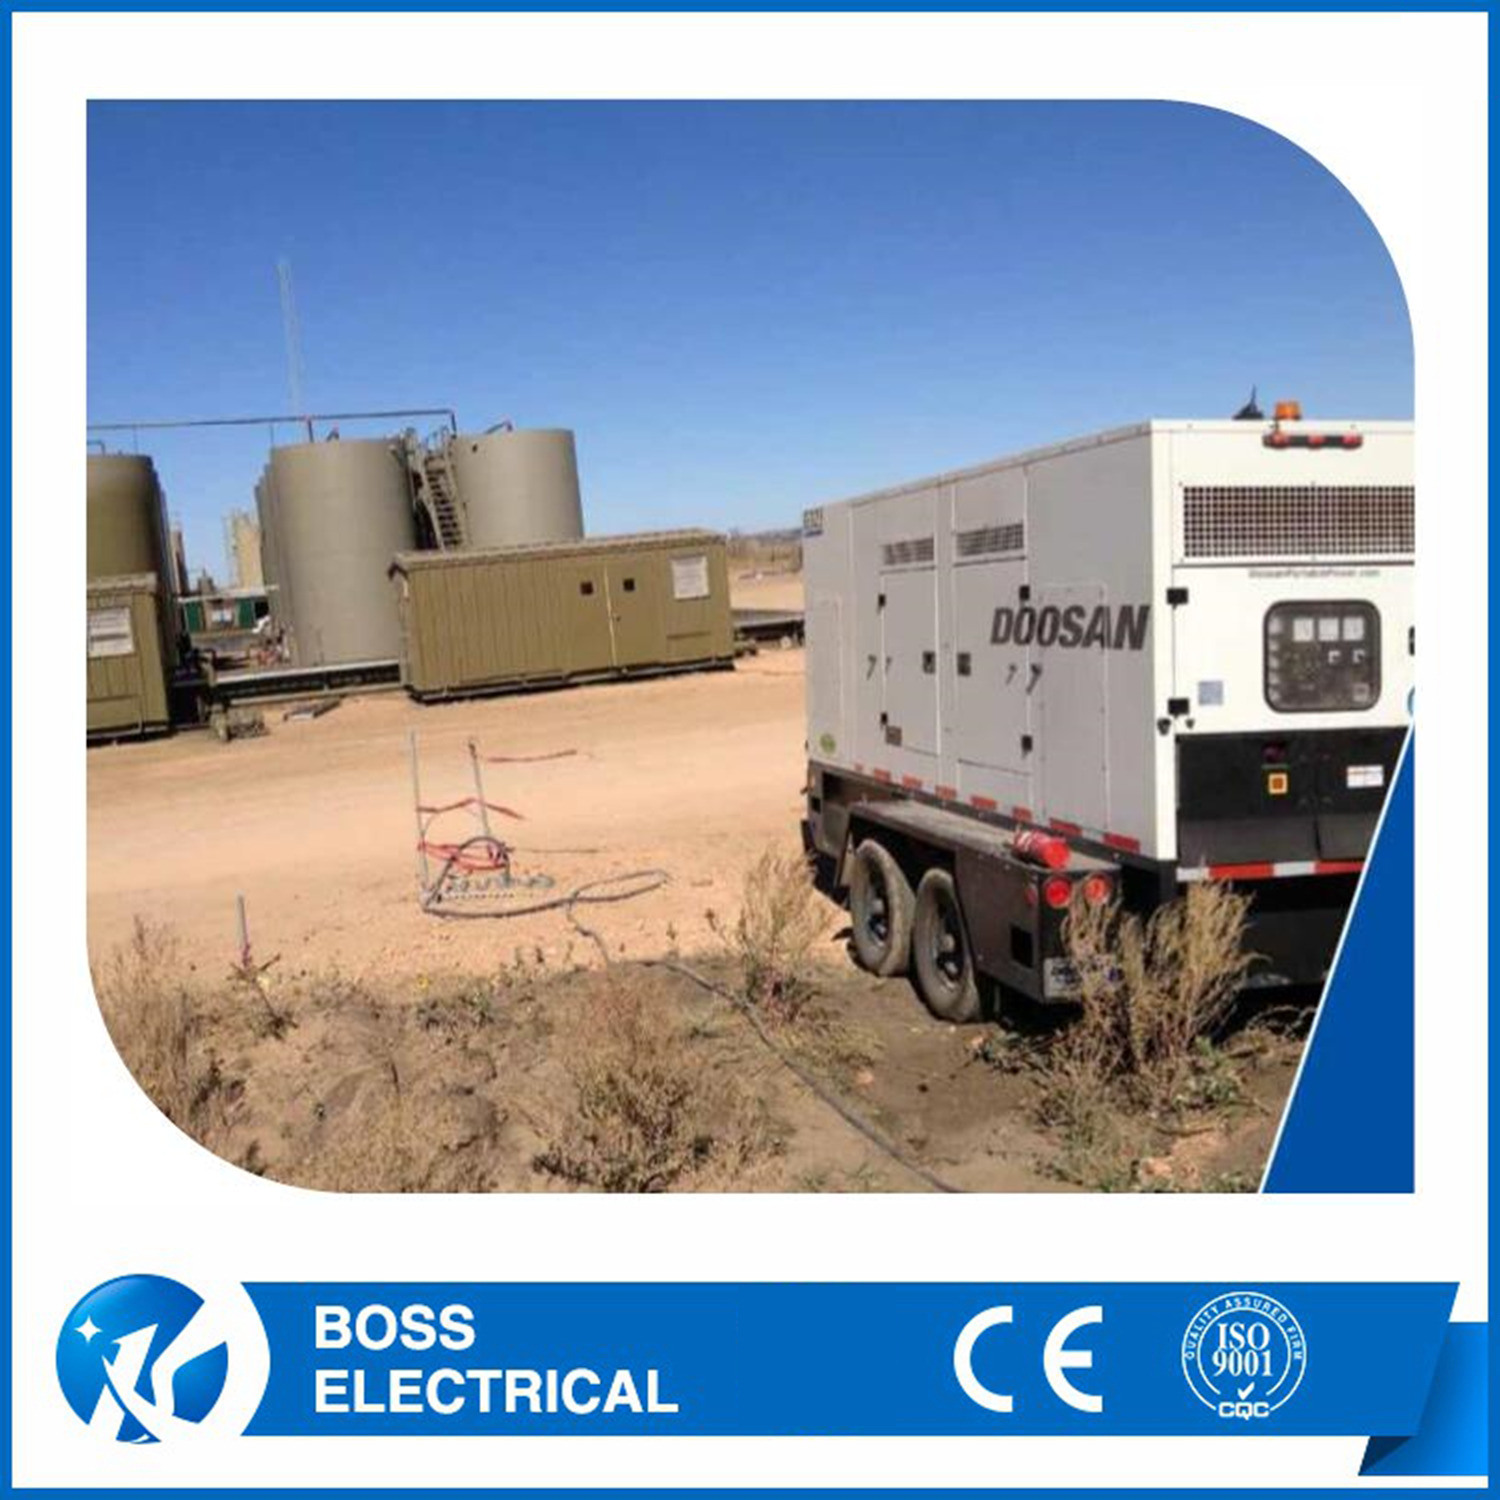 Dp086ta Water Cooled Doosan Diesel Power Electric Generator Set (120KW/150kVA)